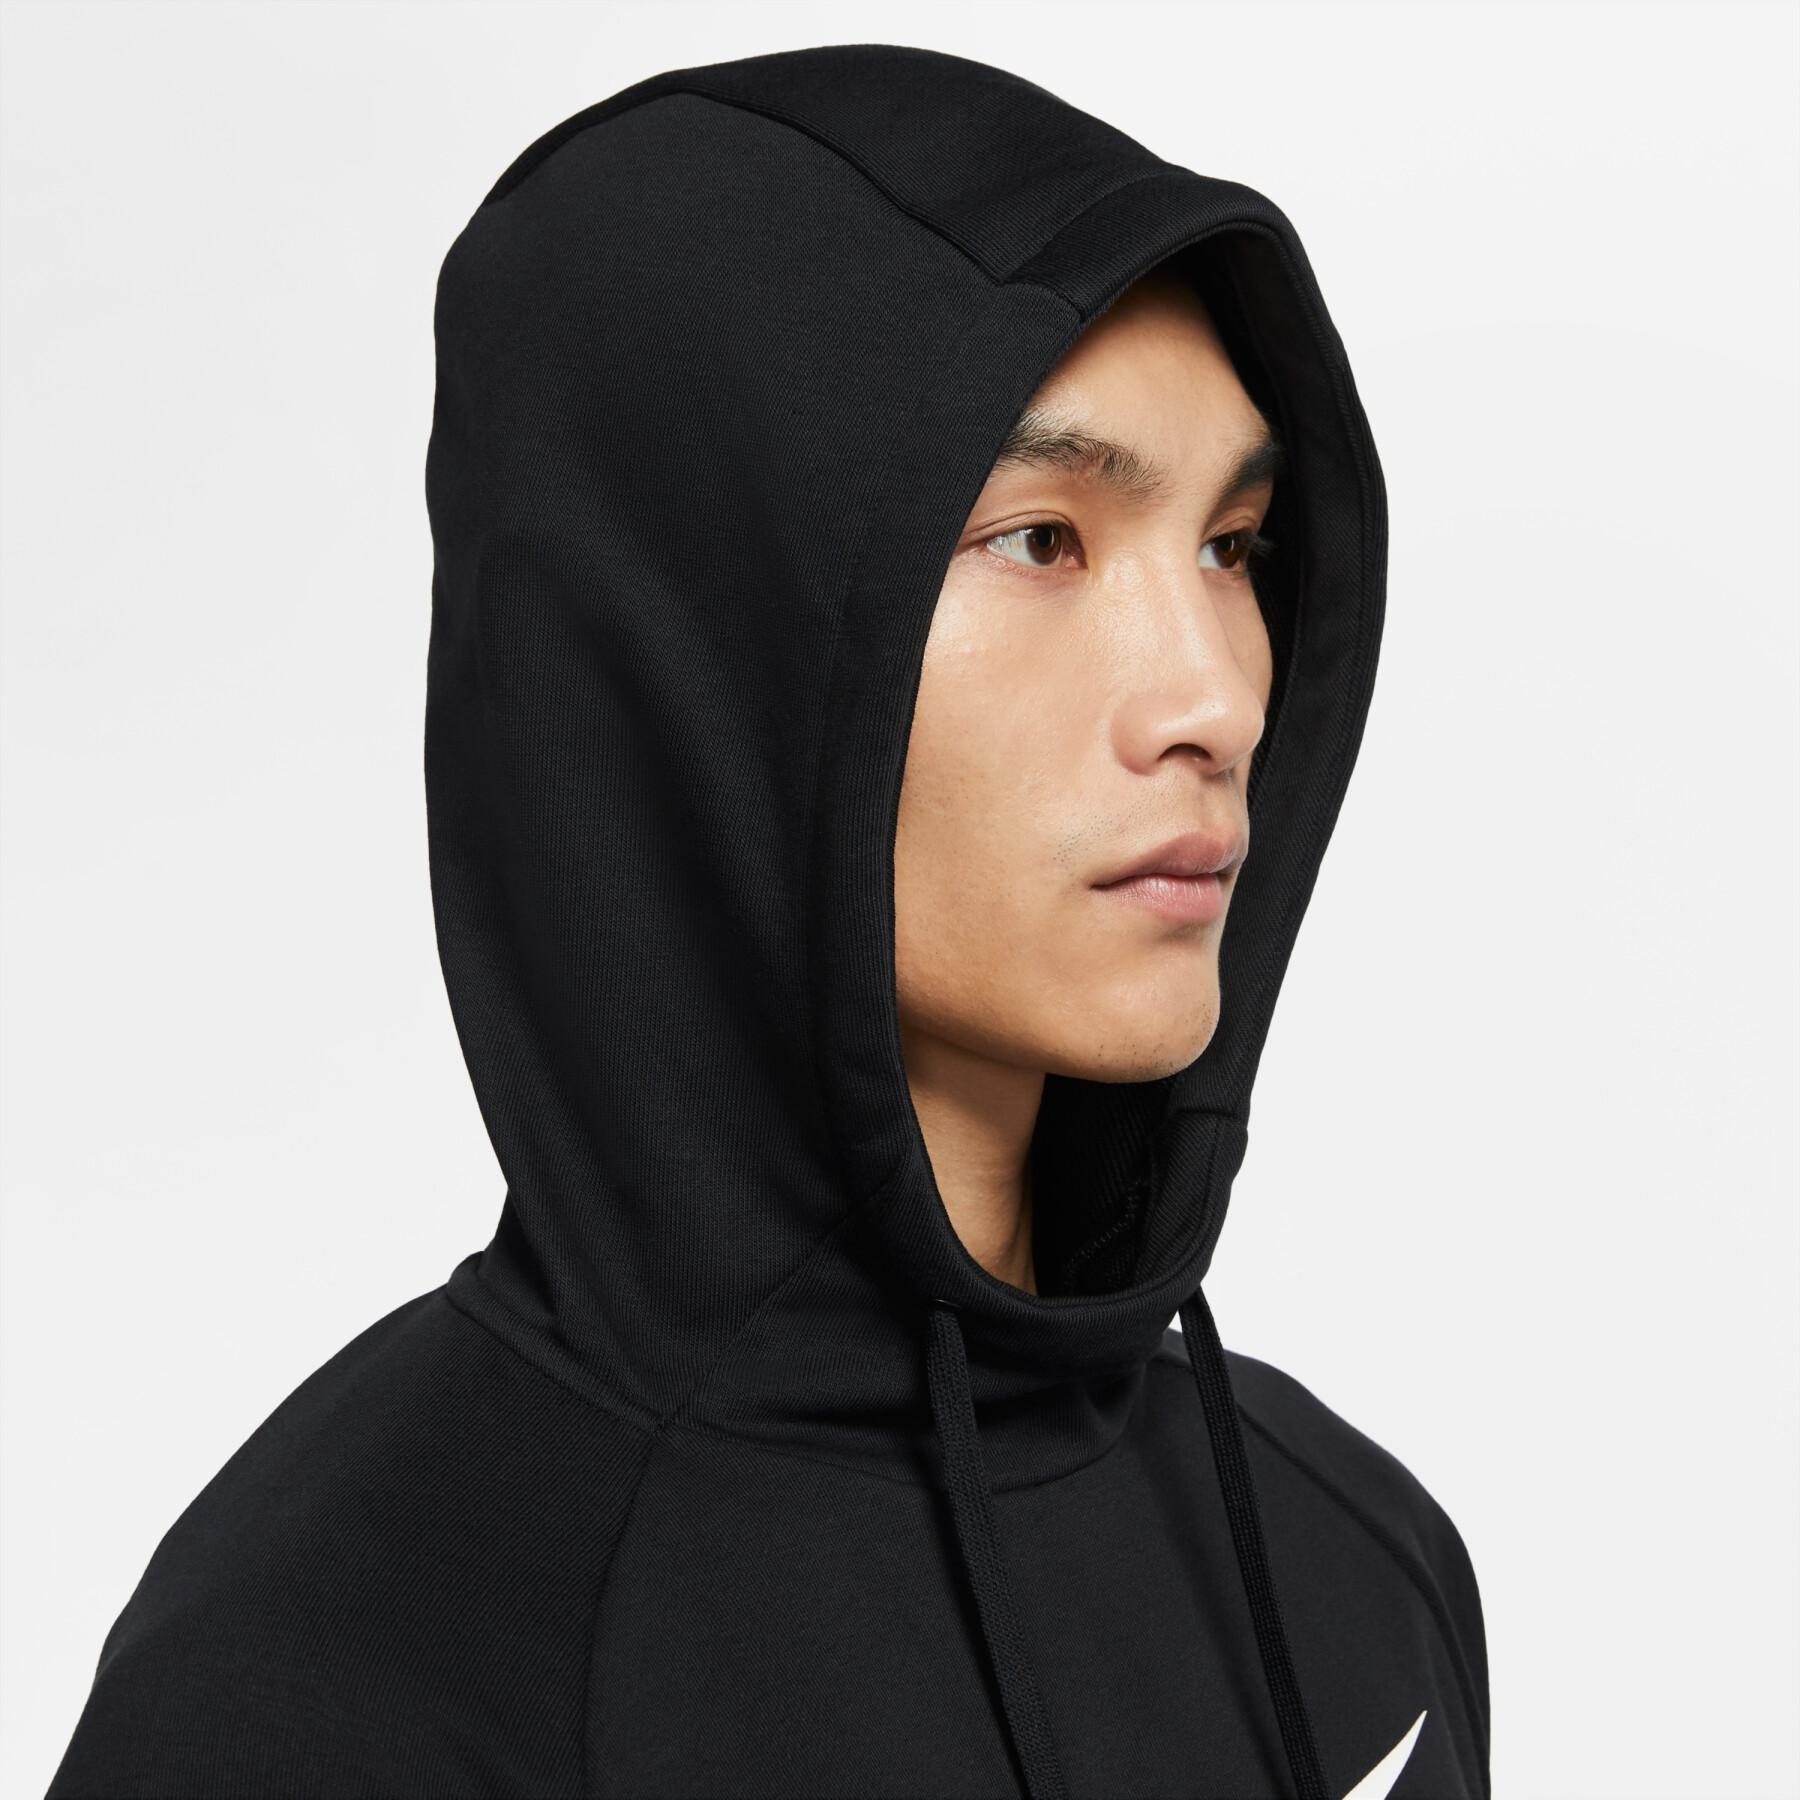 Sweatshirt à capuche Nike dri-fit - Nike - Marques - Textile